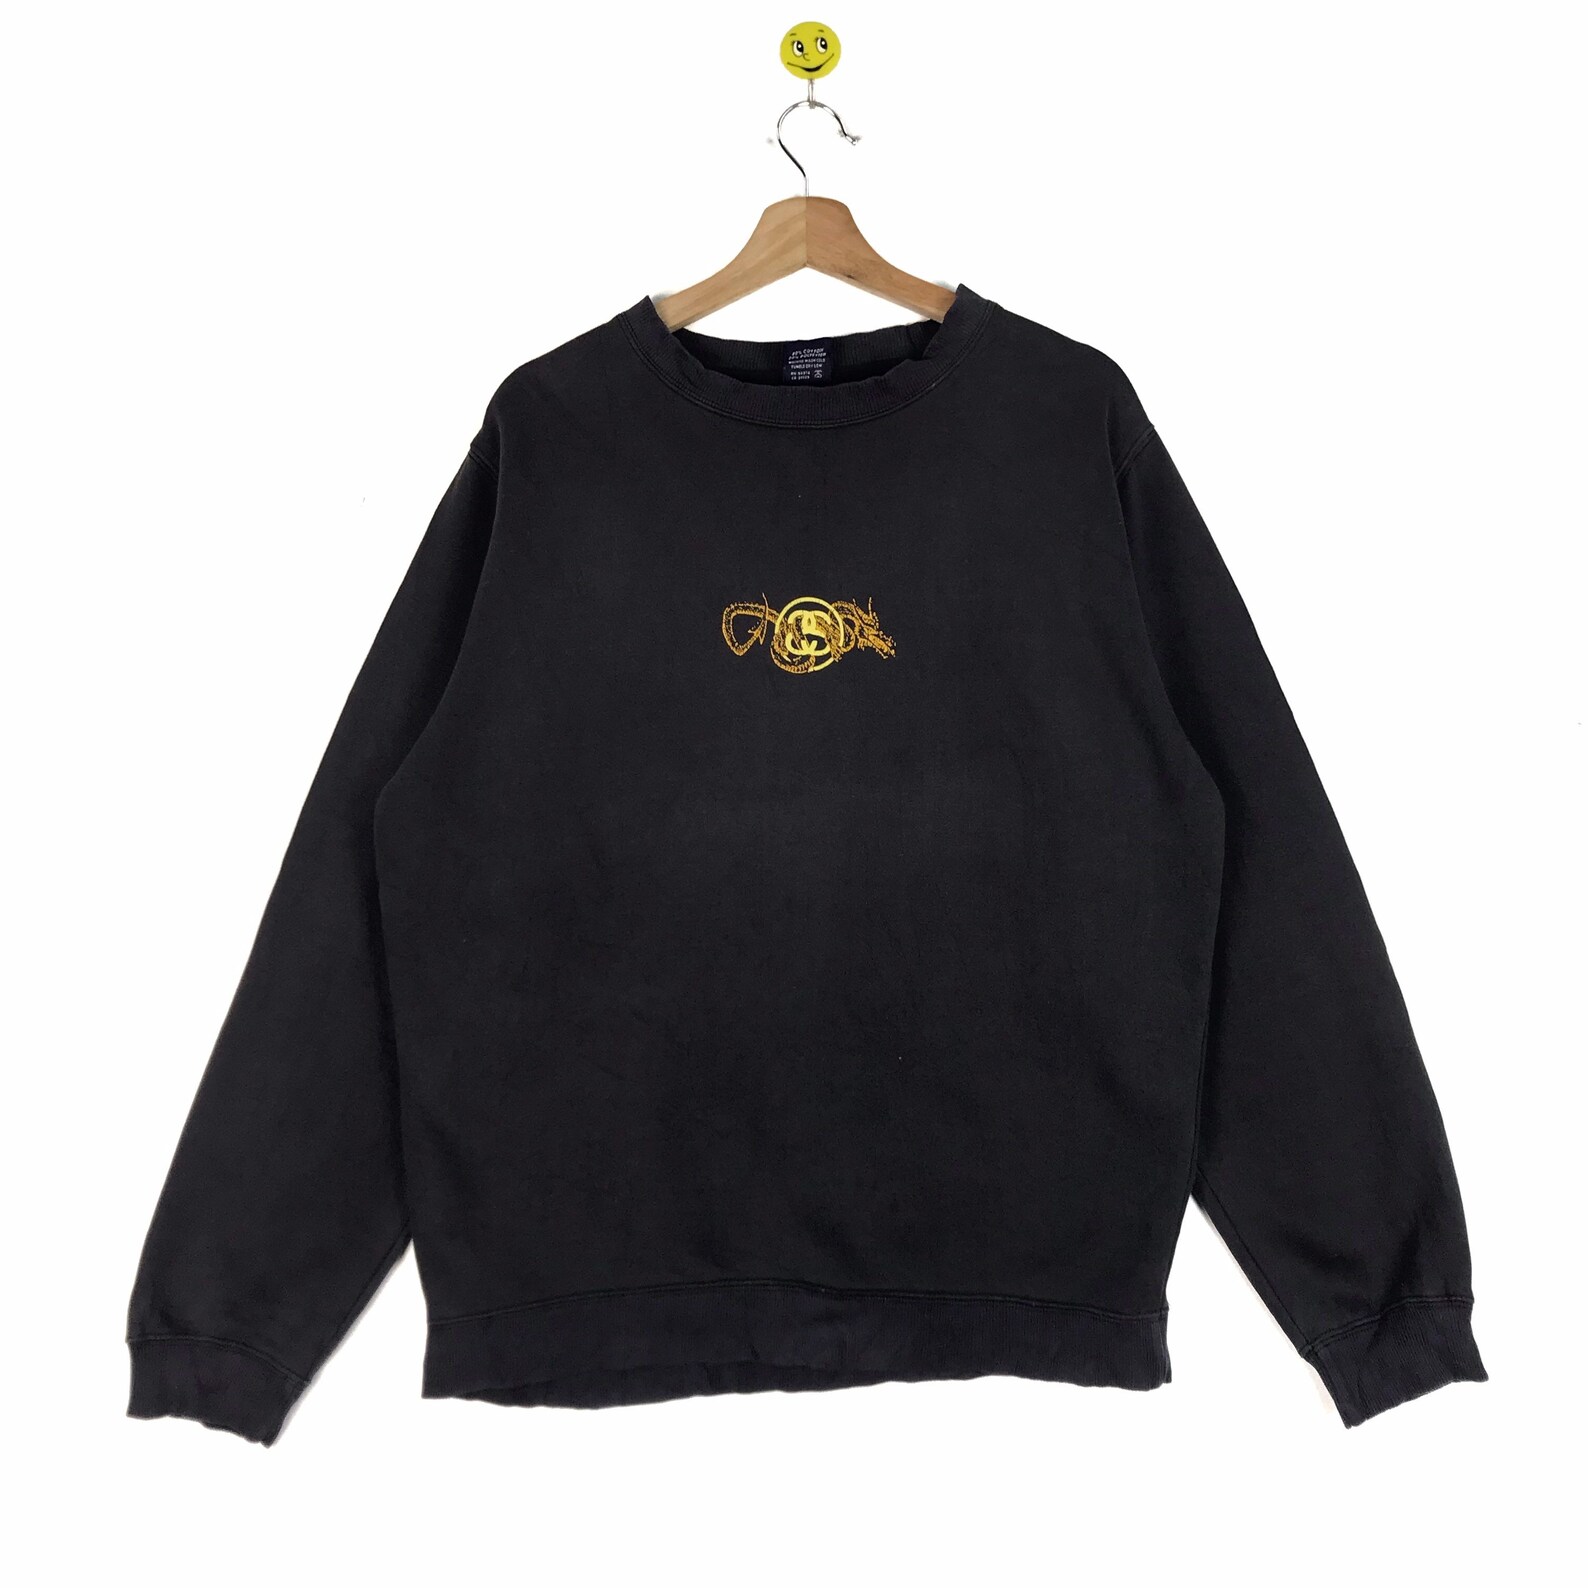 Rare Stussy sweatshirt big logo pullover jumper sweater | Etsy